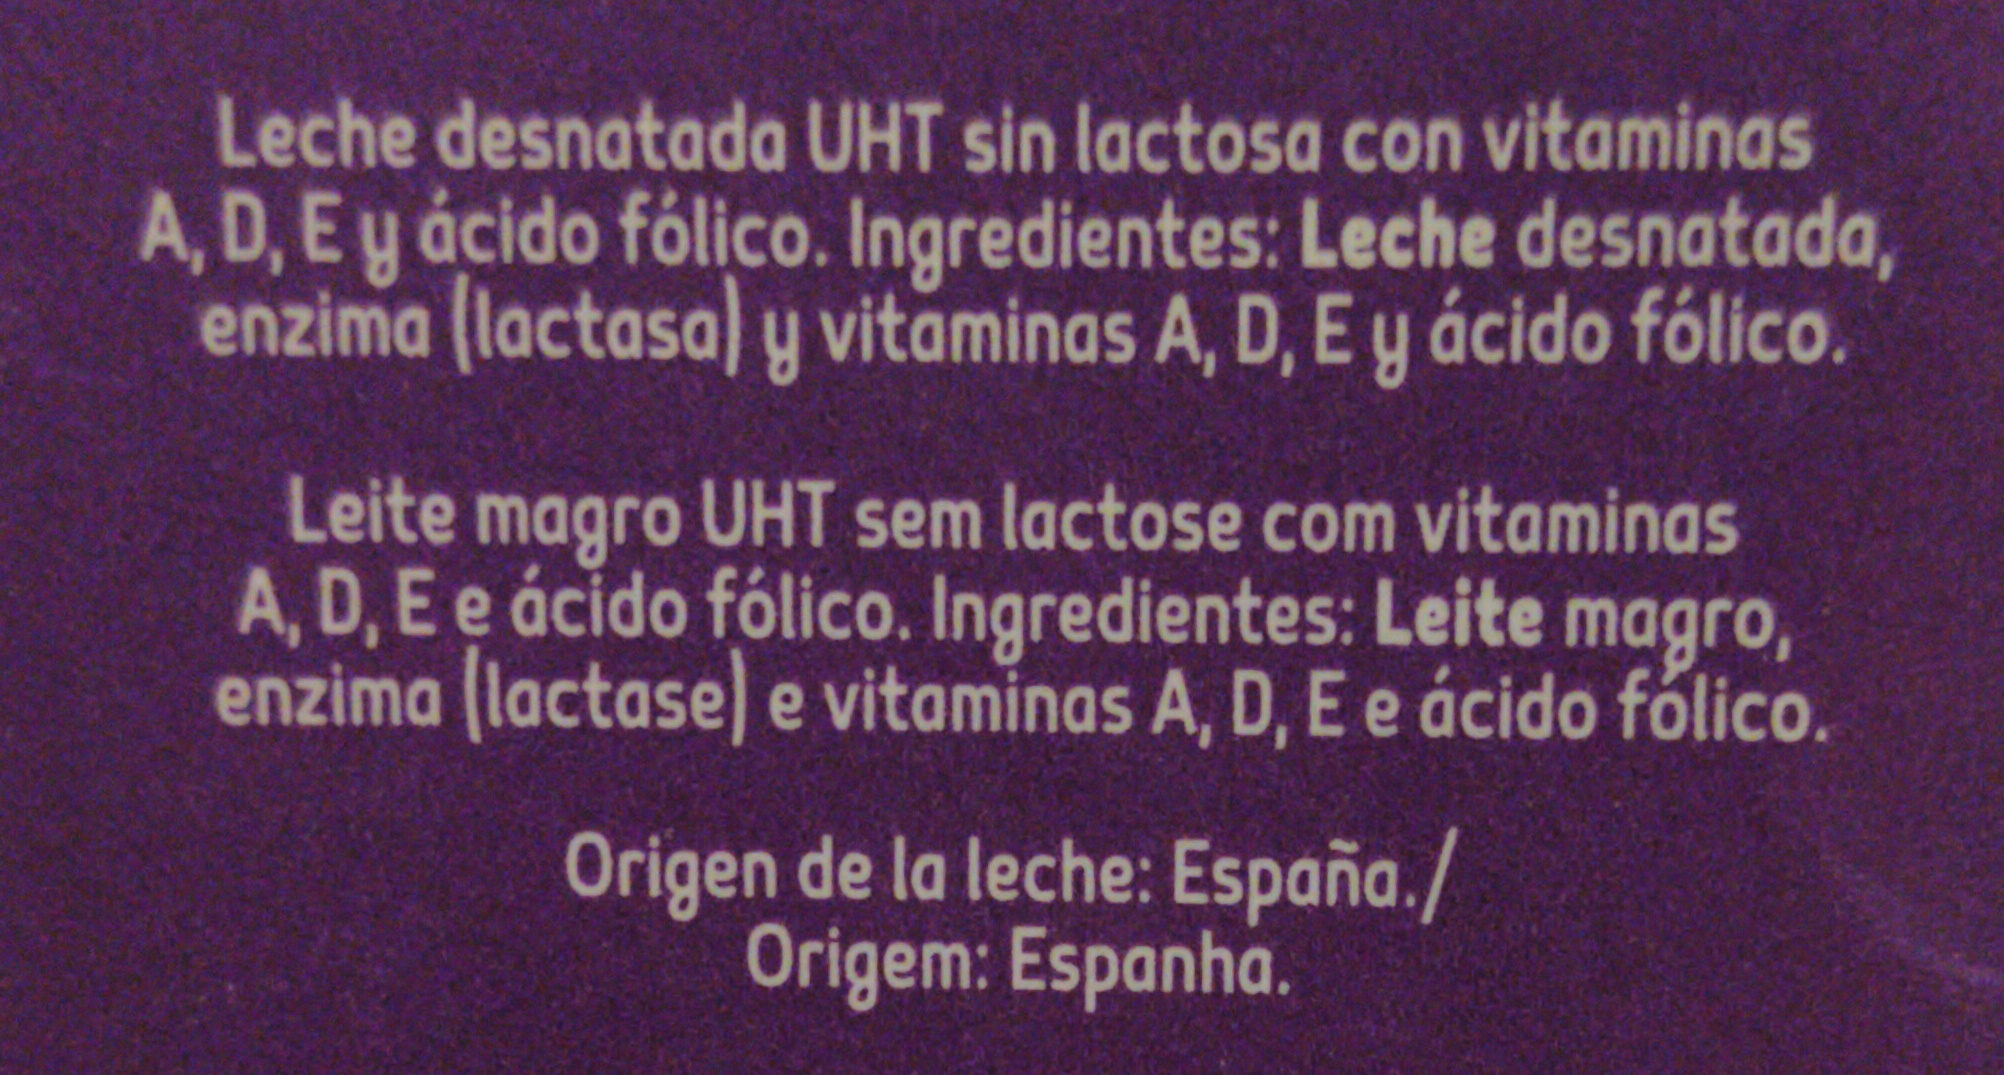 Leche desnatada sin lactosa - Ingredientes